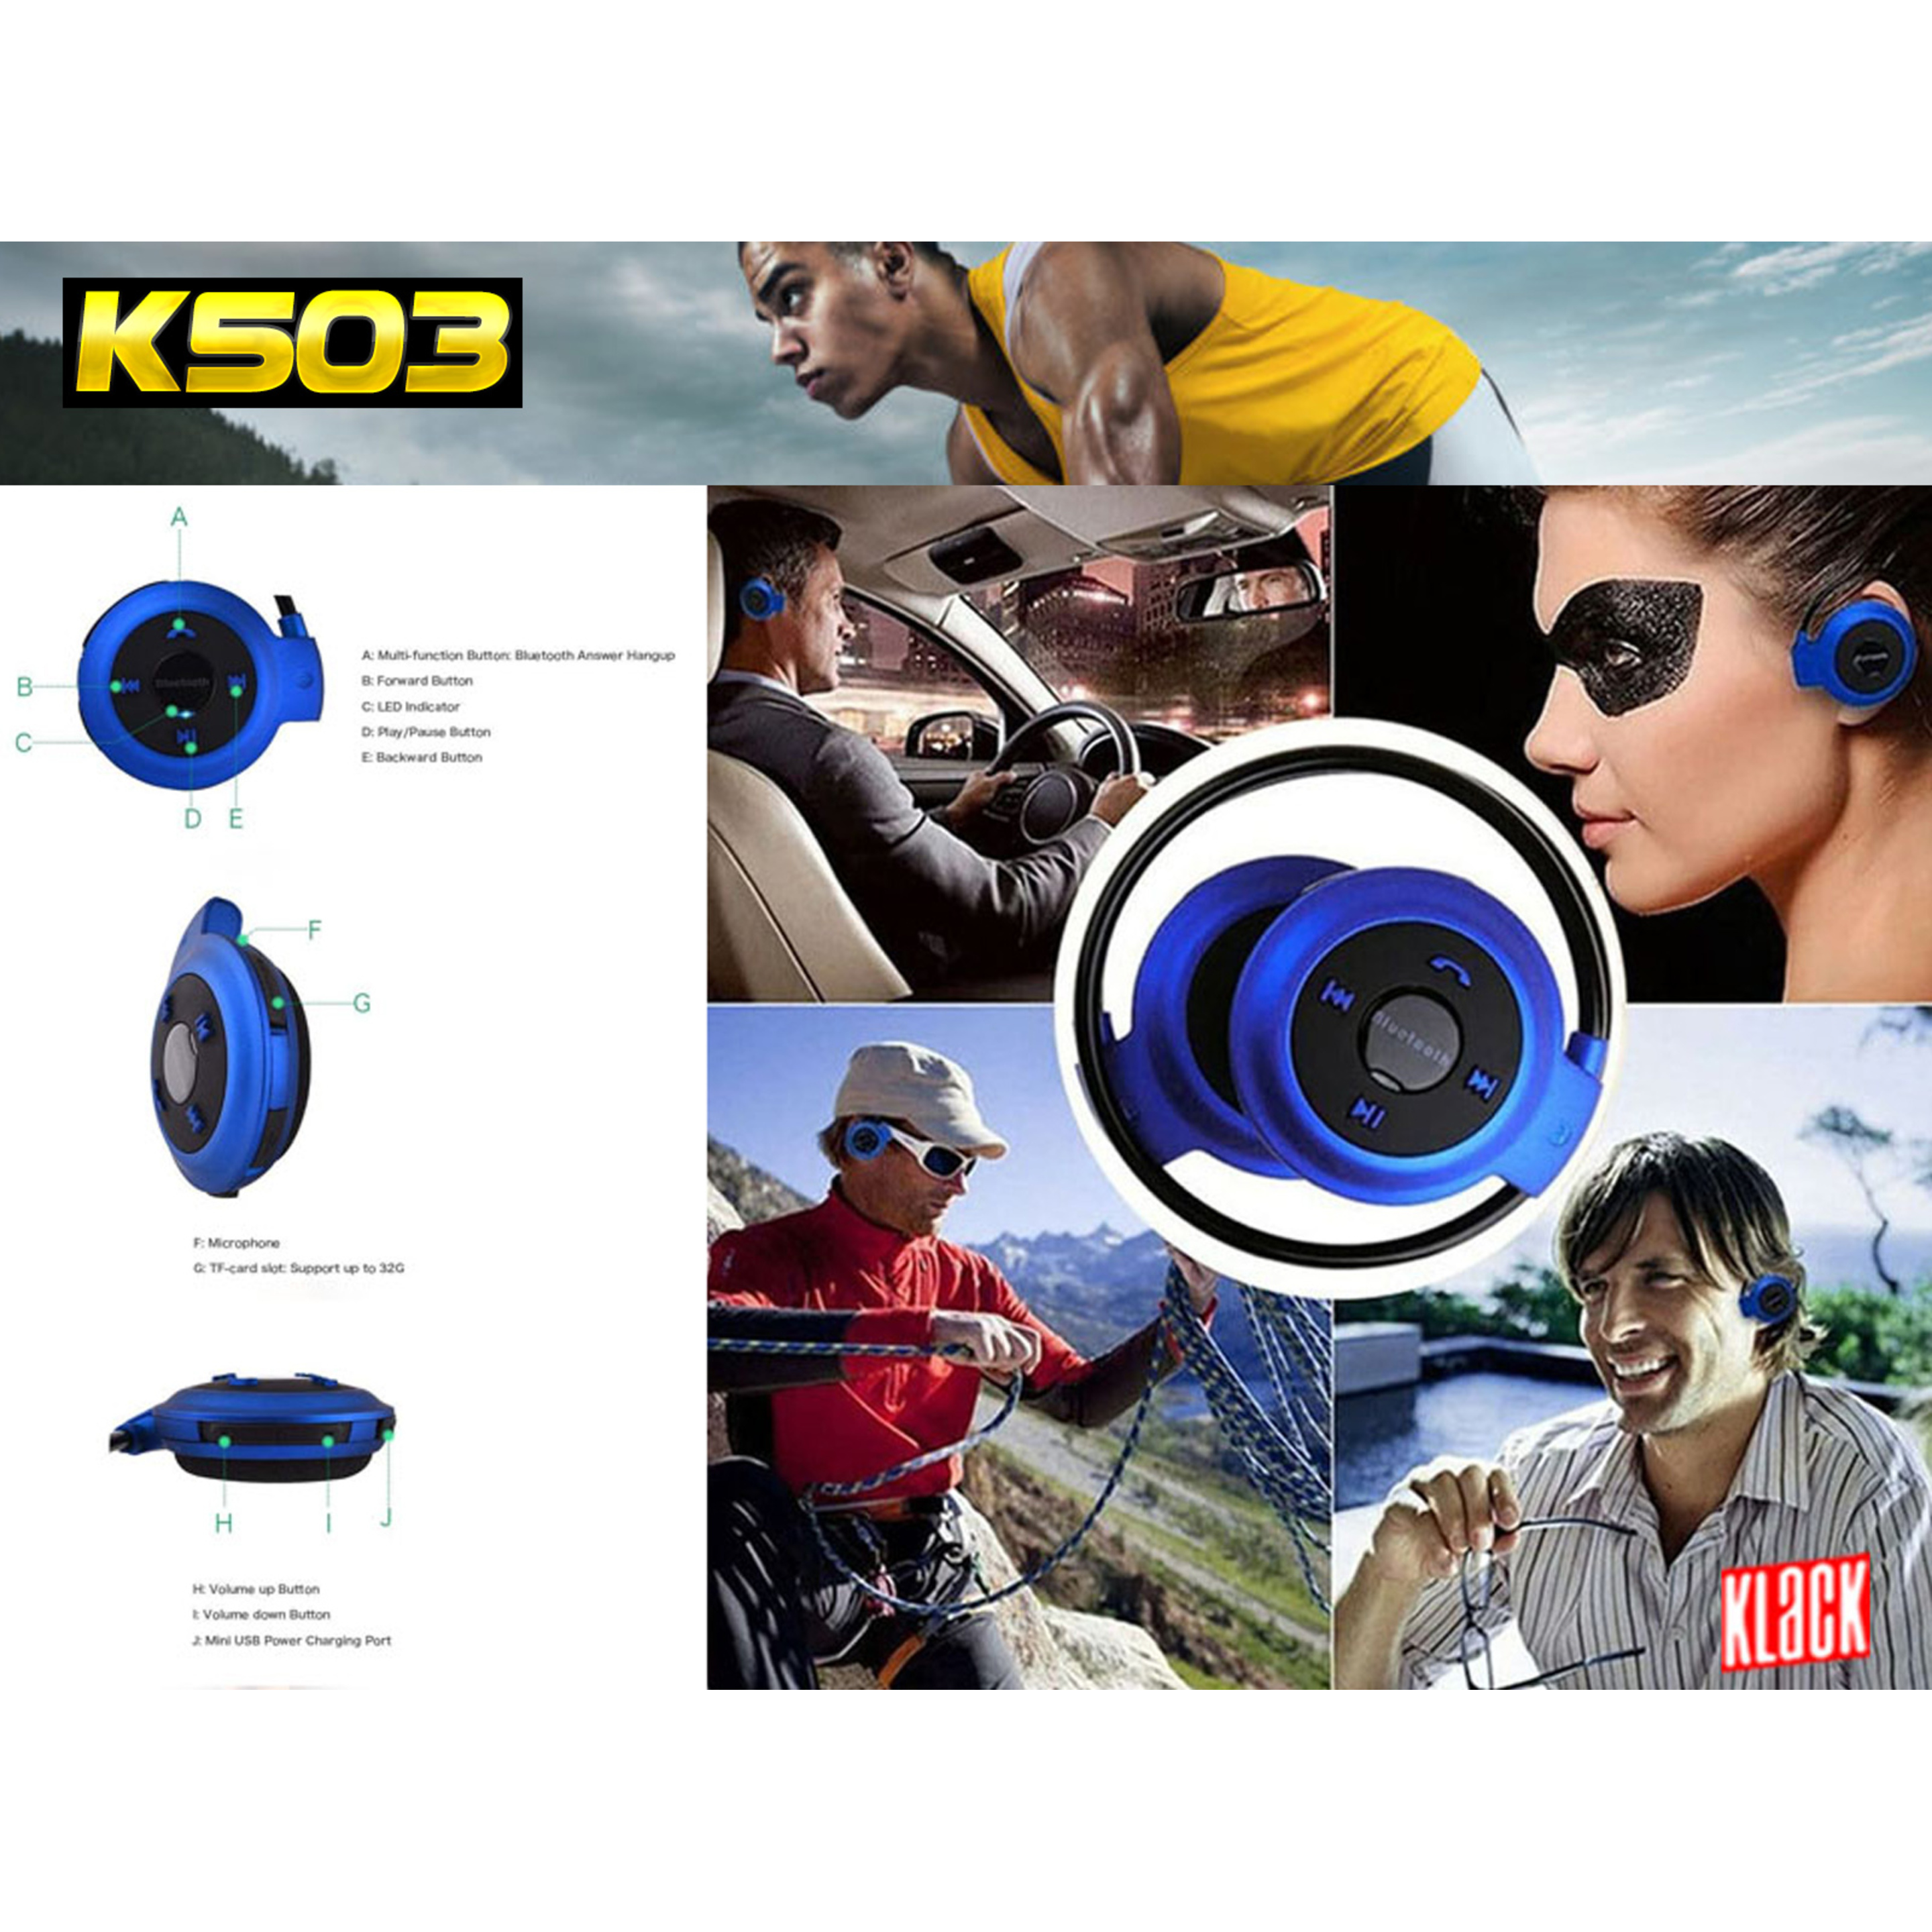 Auriculares Bluetooth Inalambrico Radio Fm Tarjeta Sd - Azul - 503  MKP